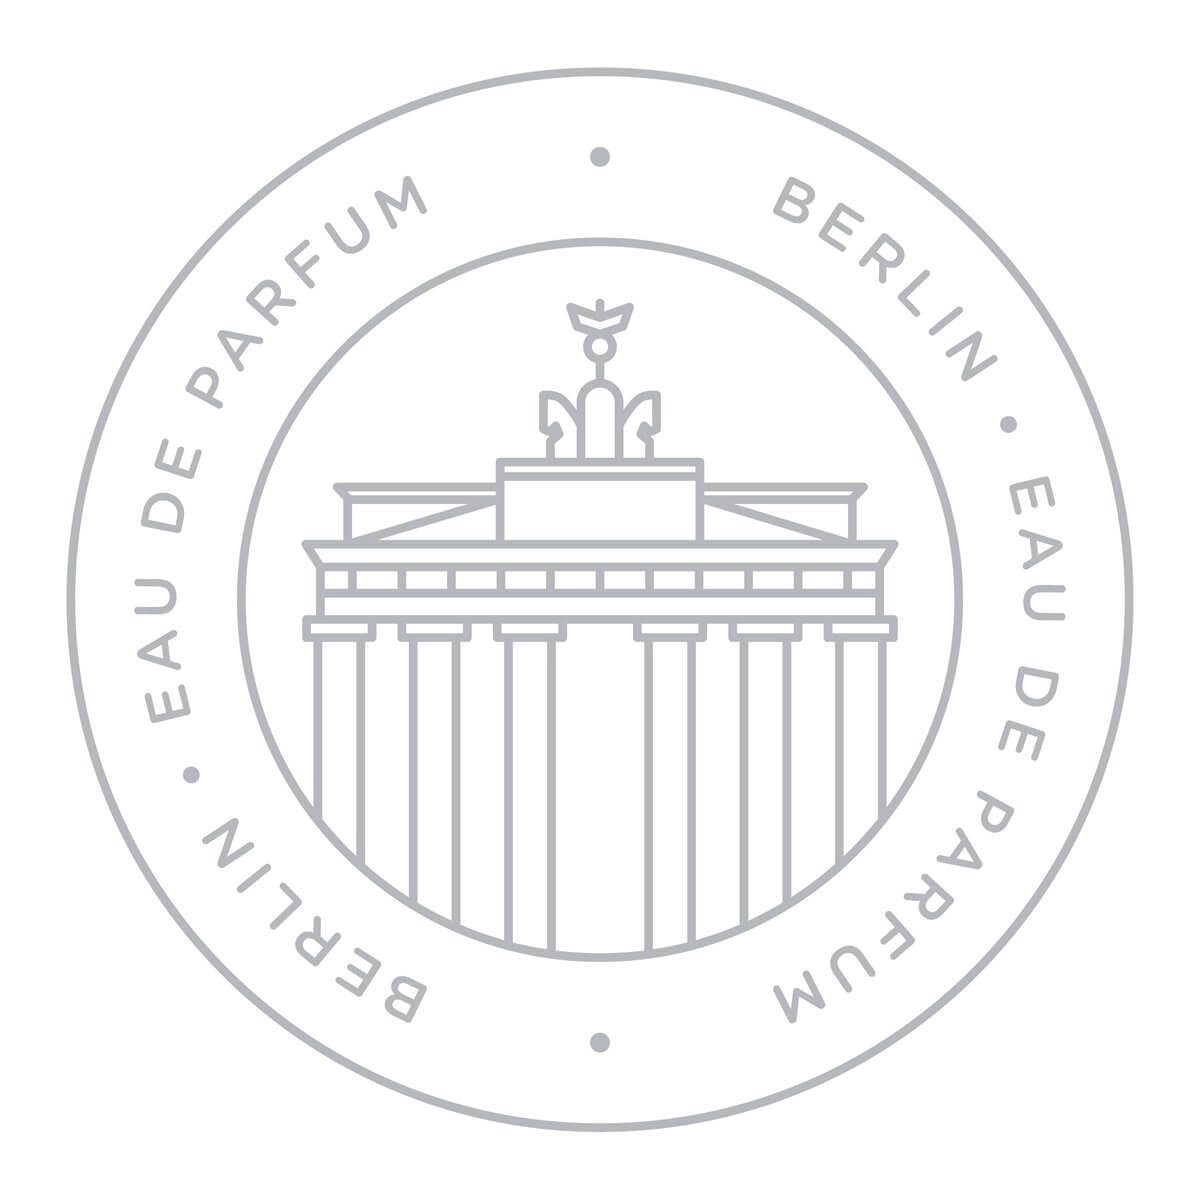 Berlin badge by Gallivant at Indigo Perfumery